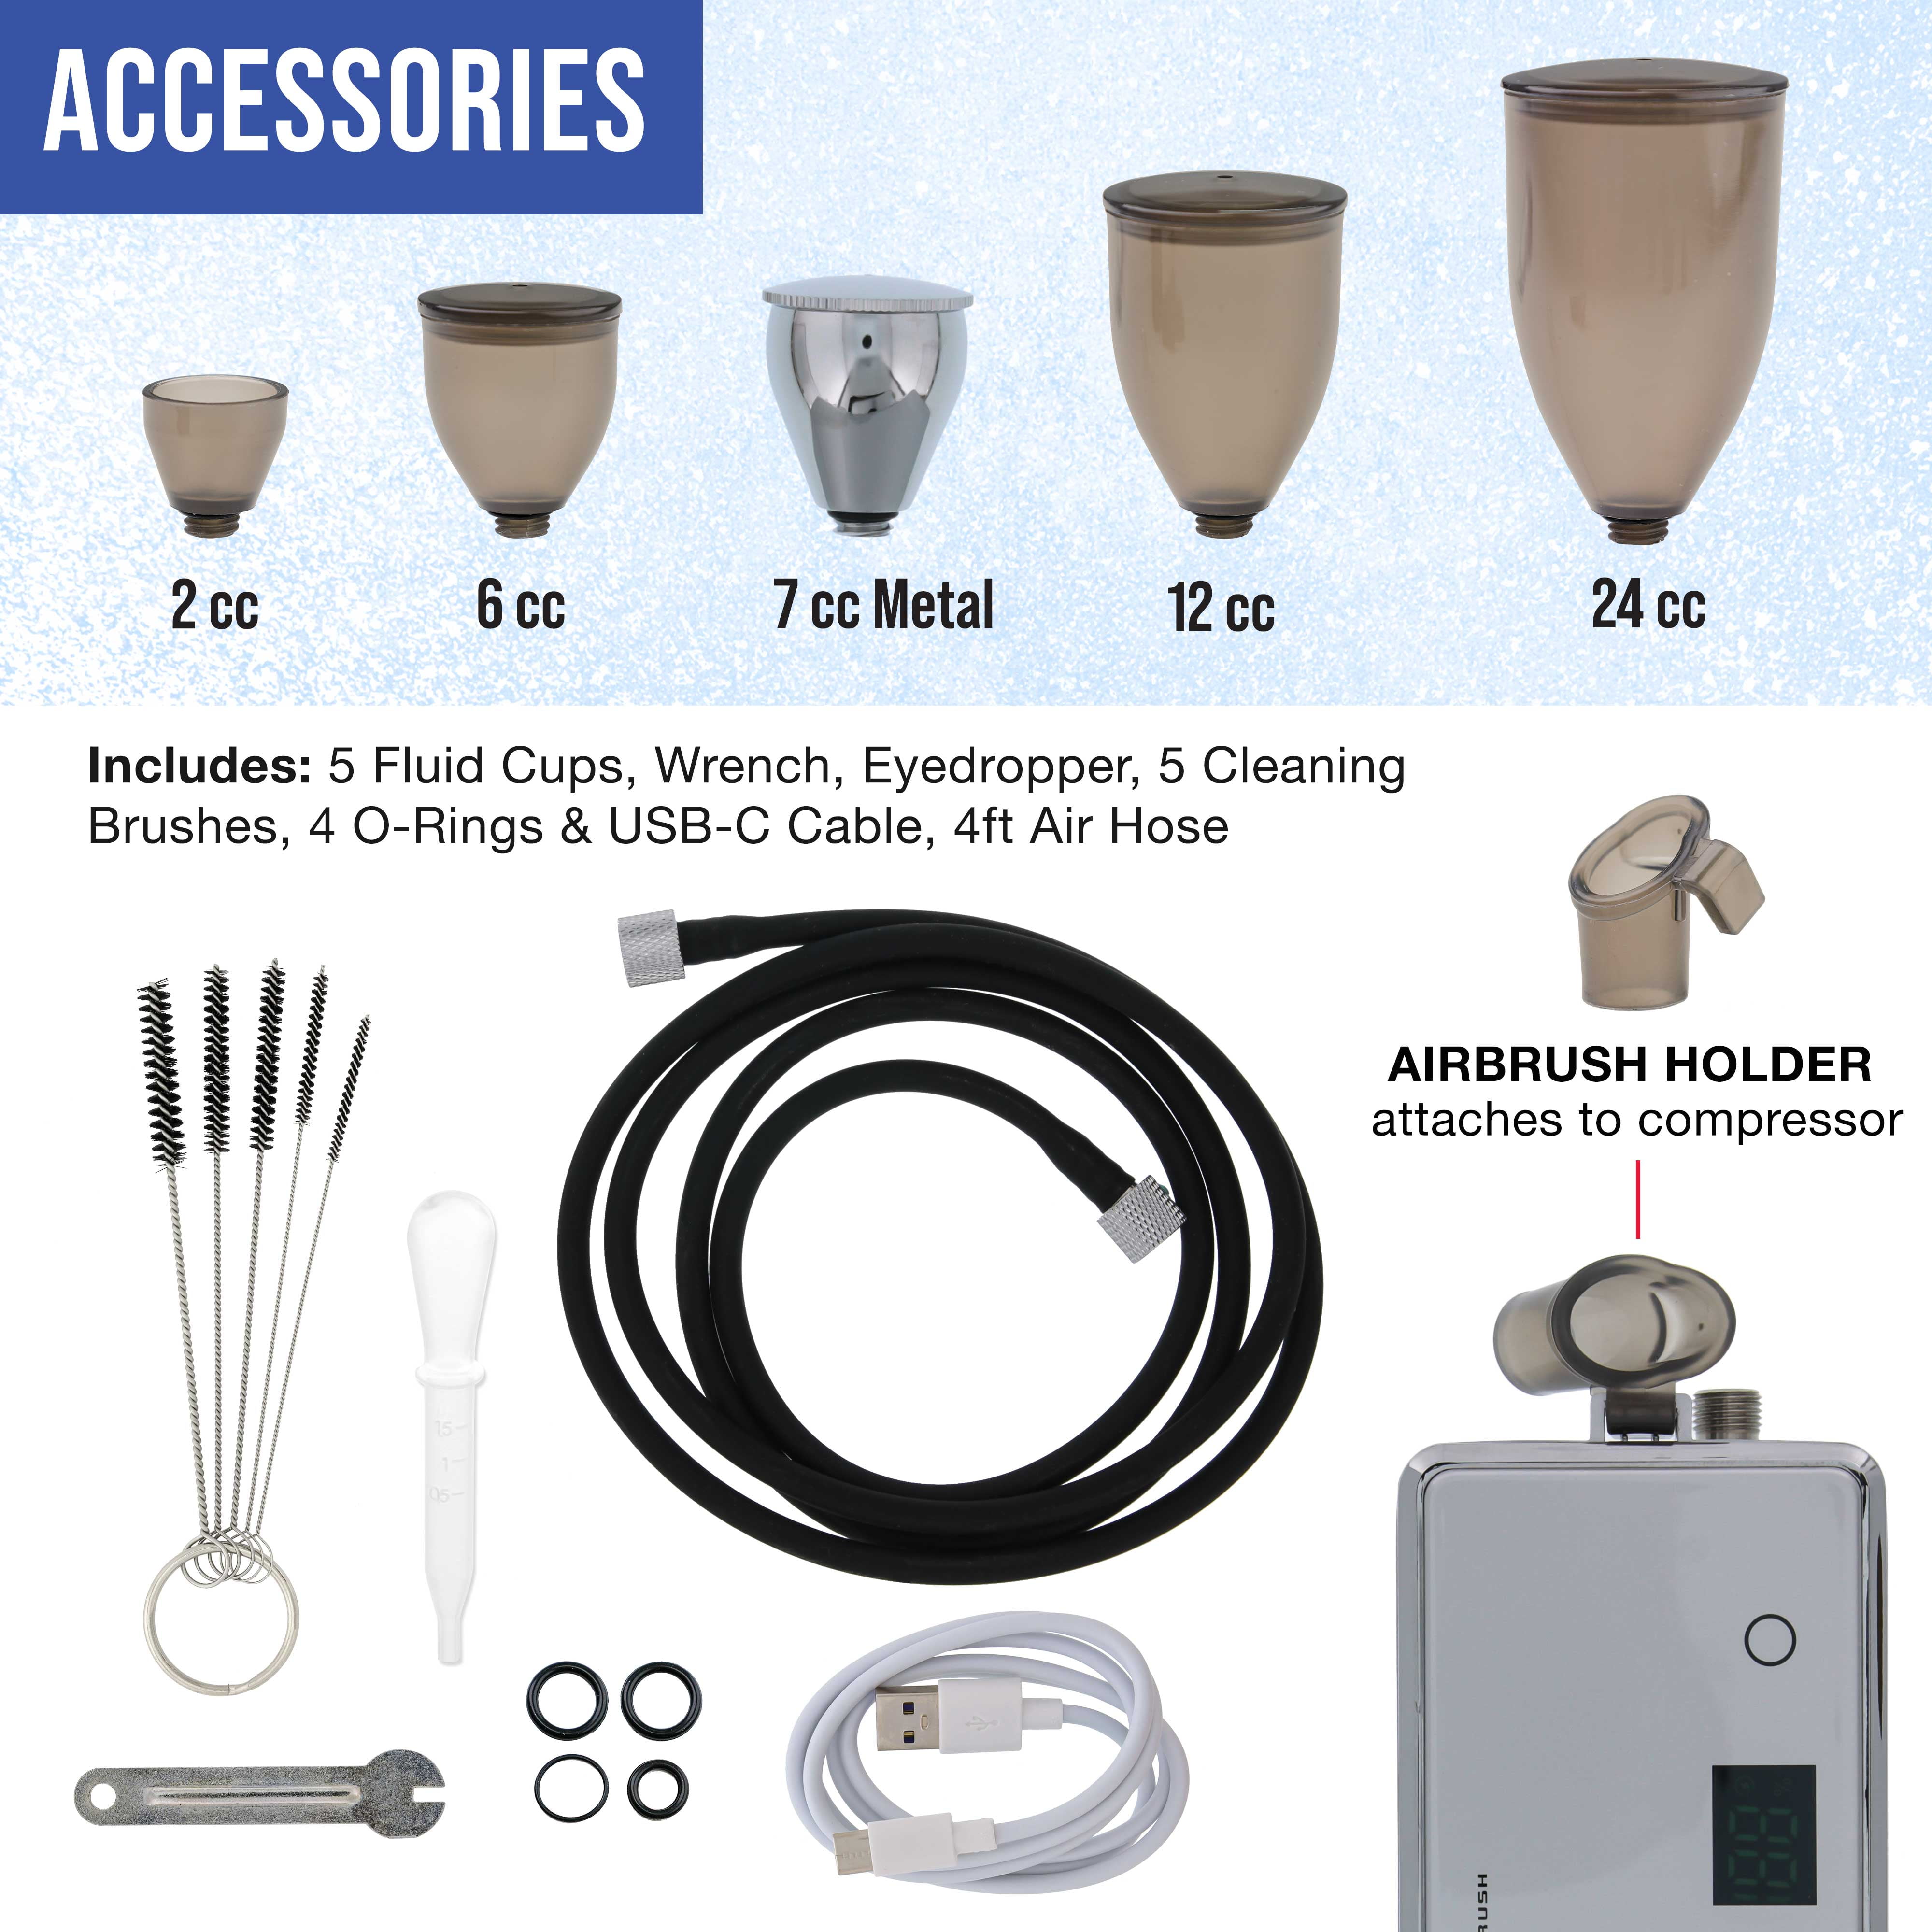 PEIION Airbrush Kit 36PSI Cordless Airbrush Kit with Compressor